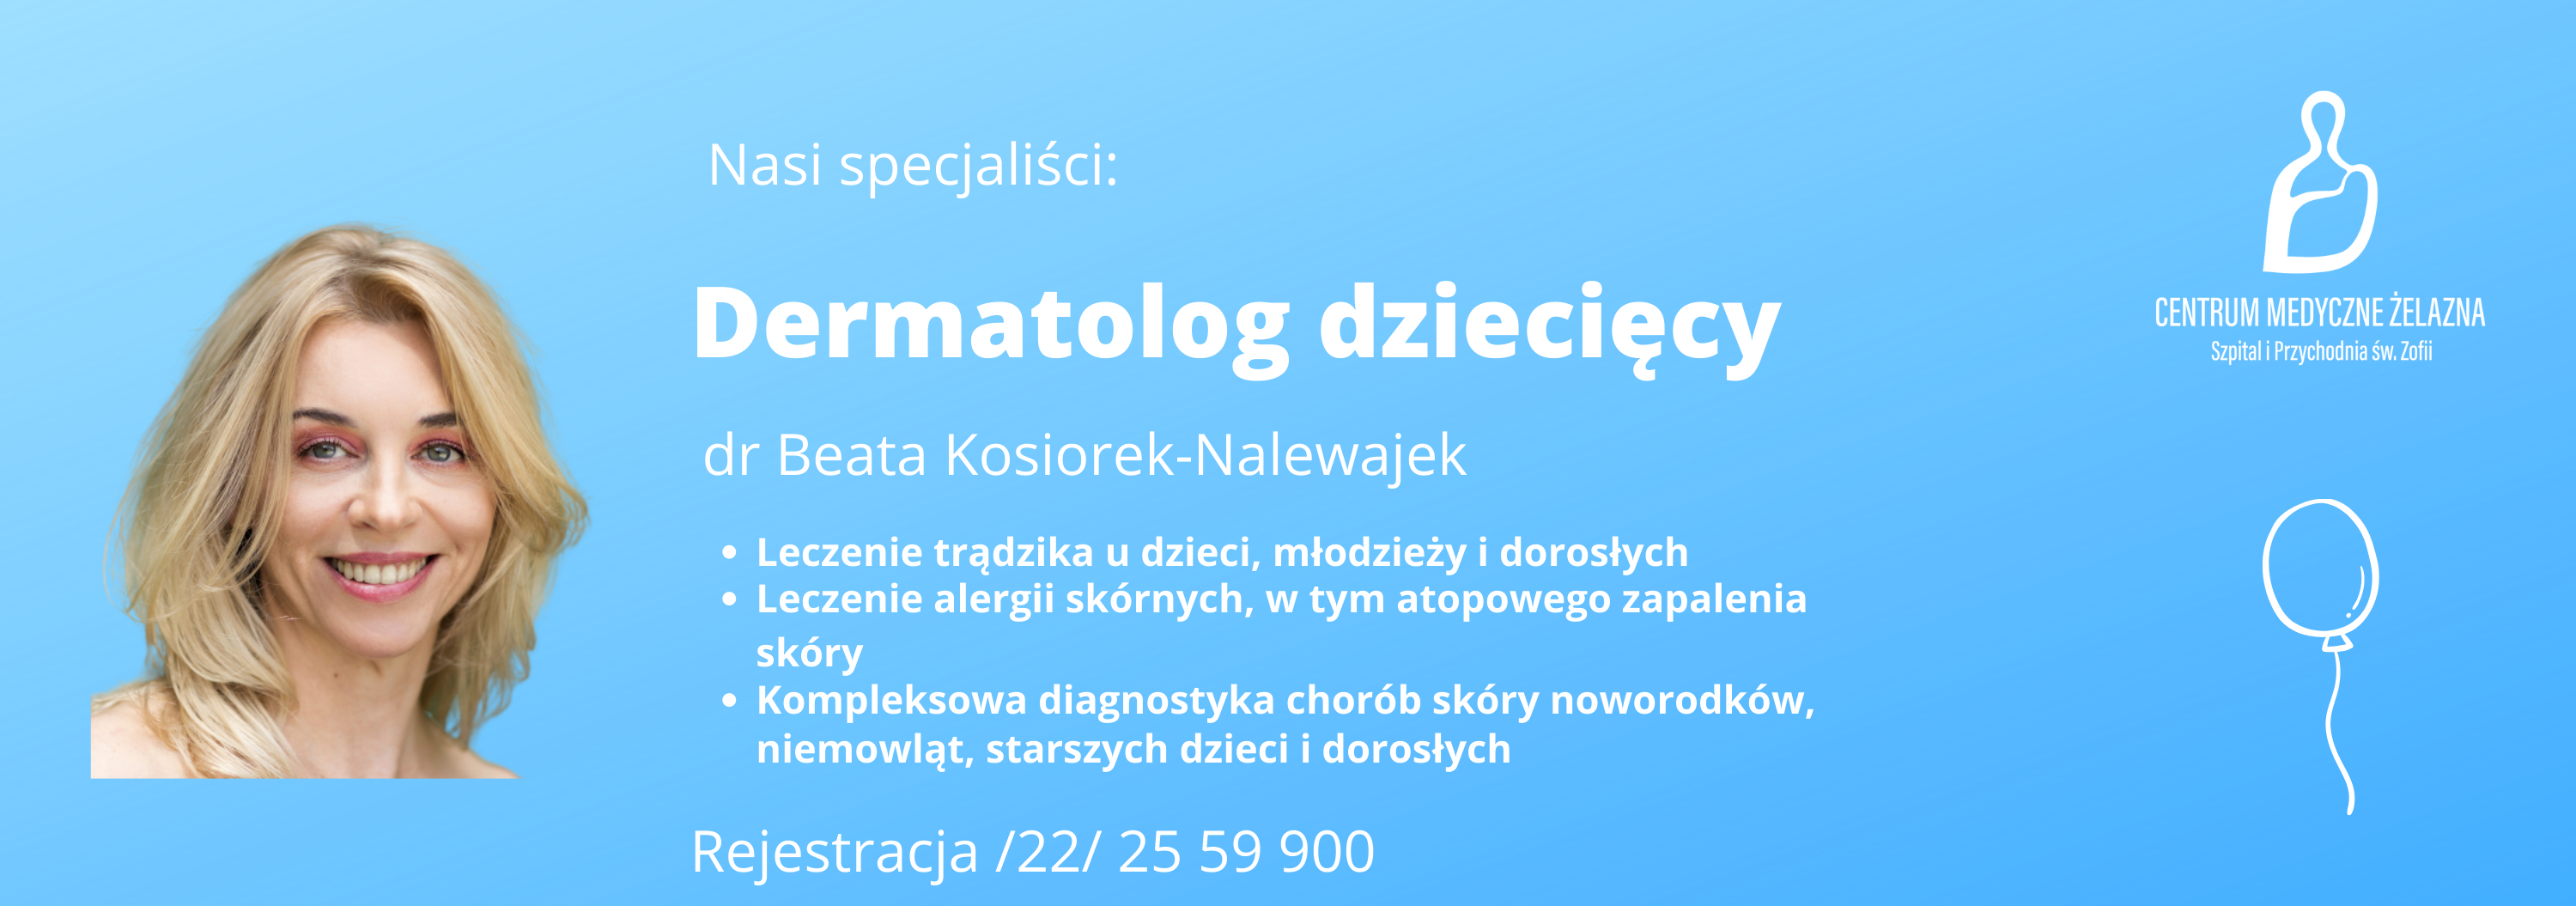 Dermatolog dziecięcy dr Beata Kosiorek-Nalewajek